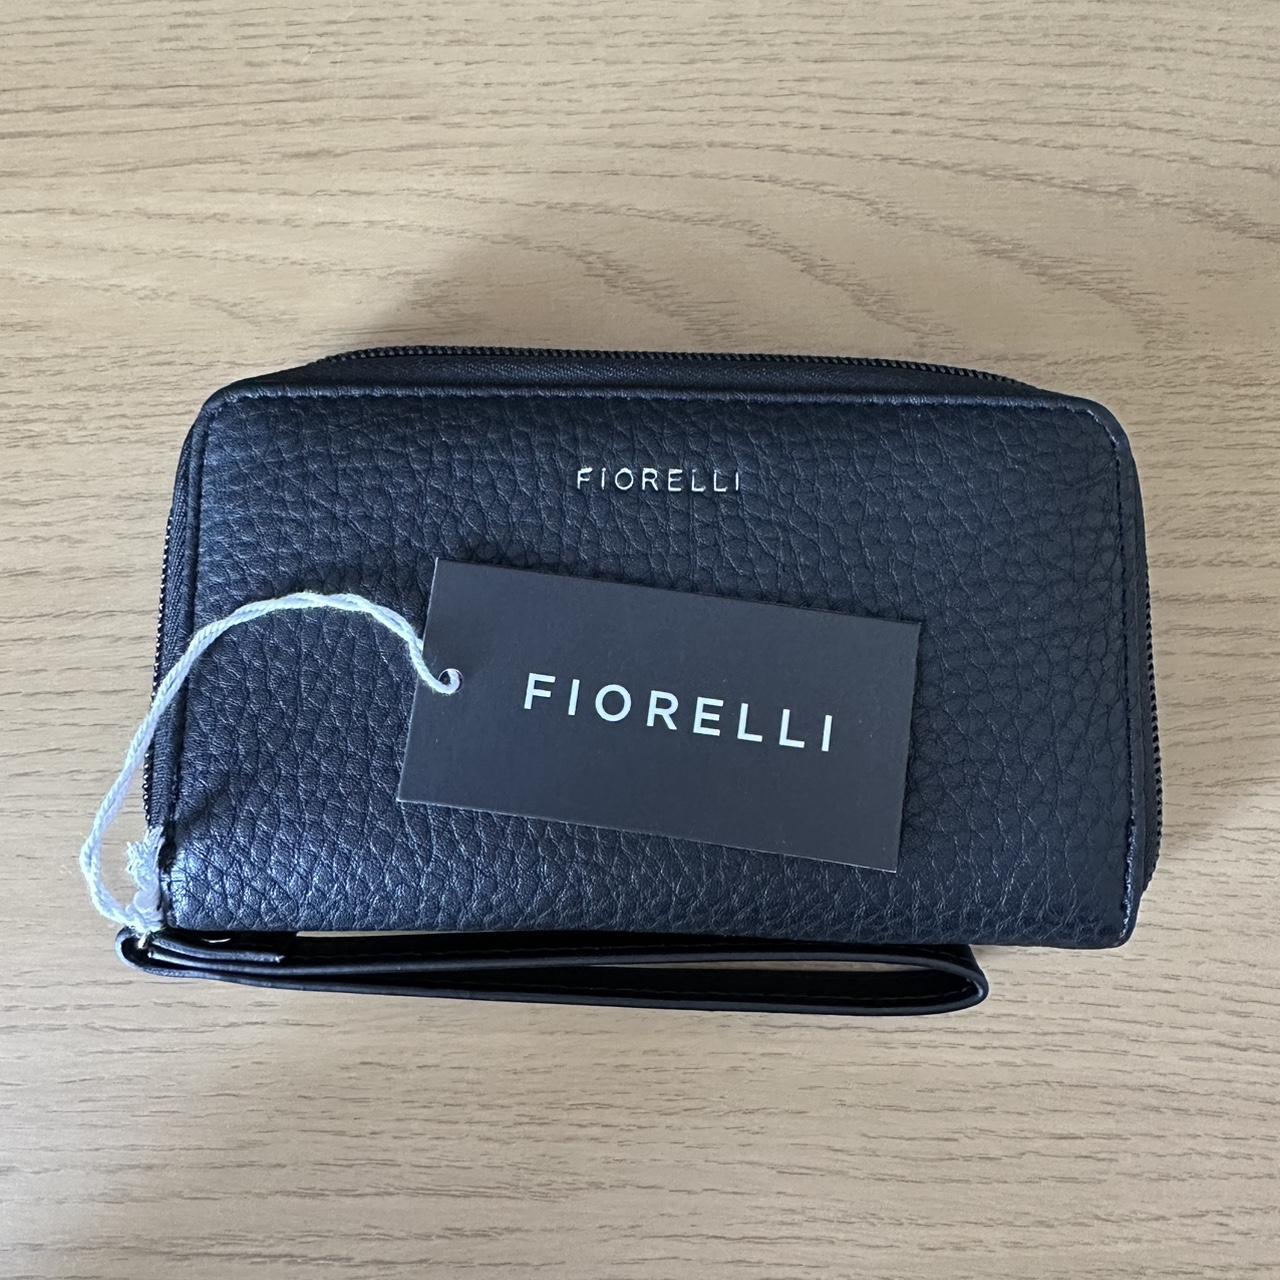 Fiorelli Purse - Black Brand new - never used... - Depop